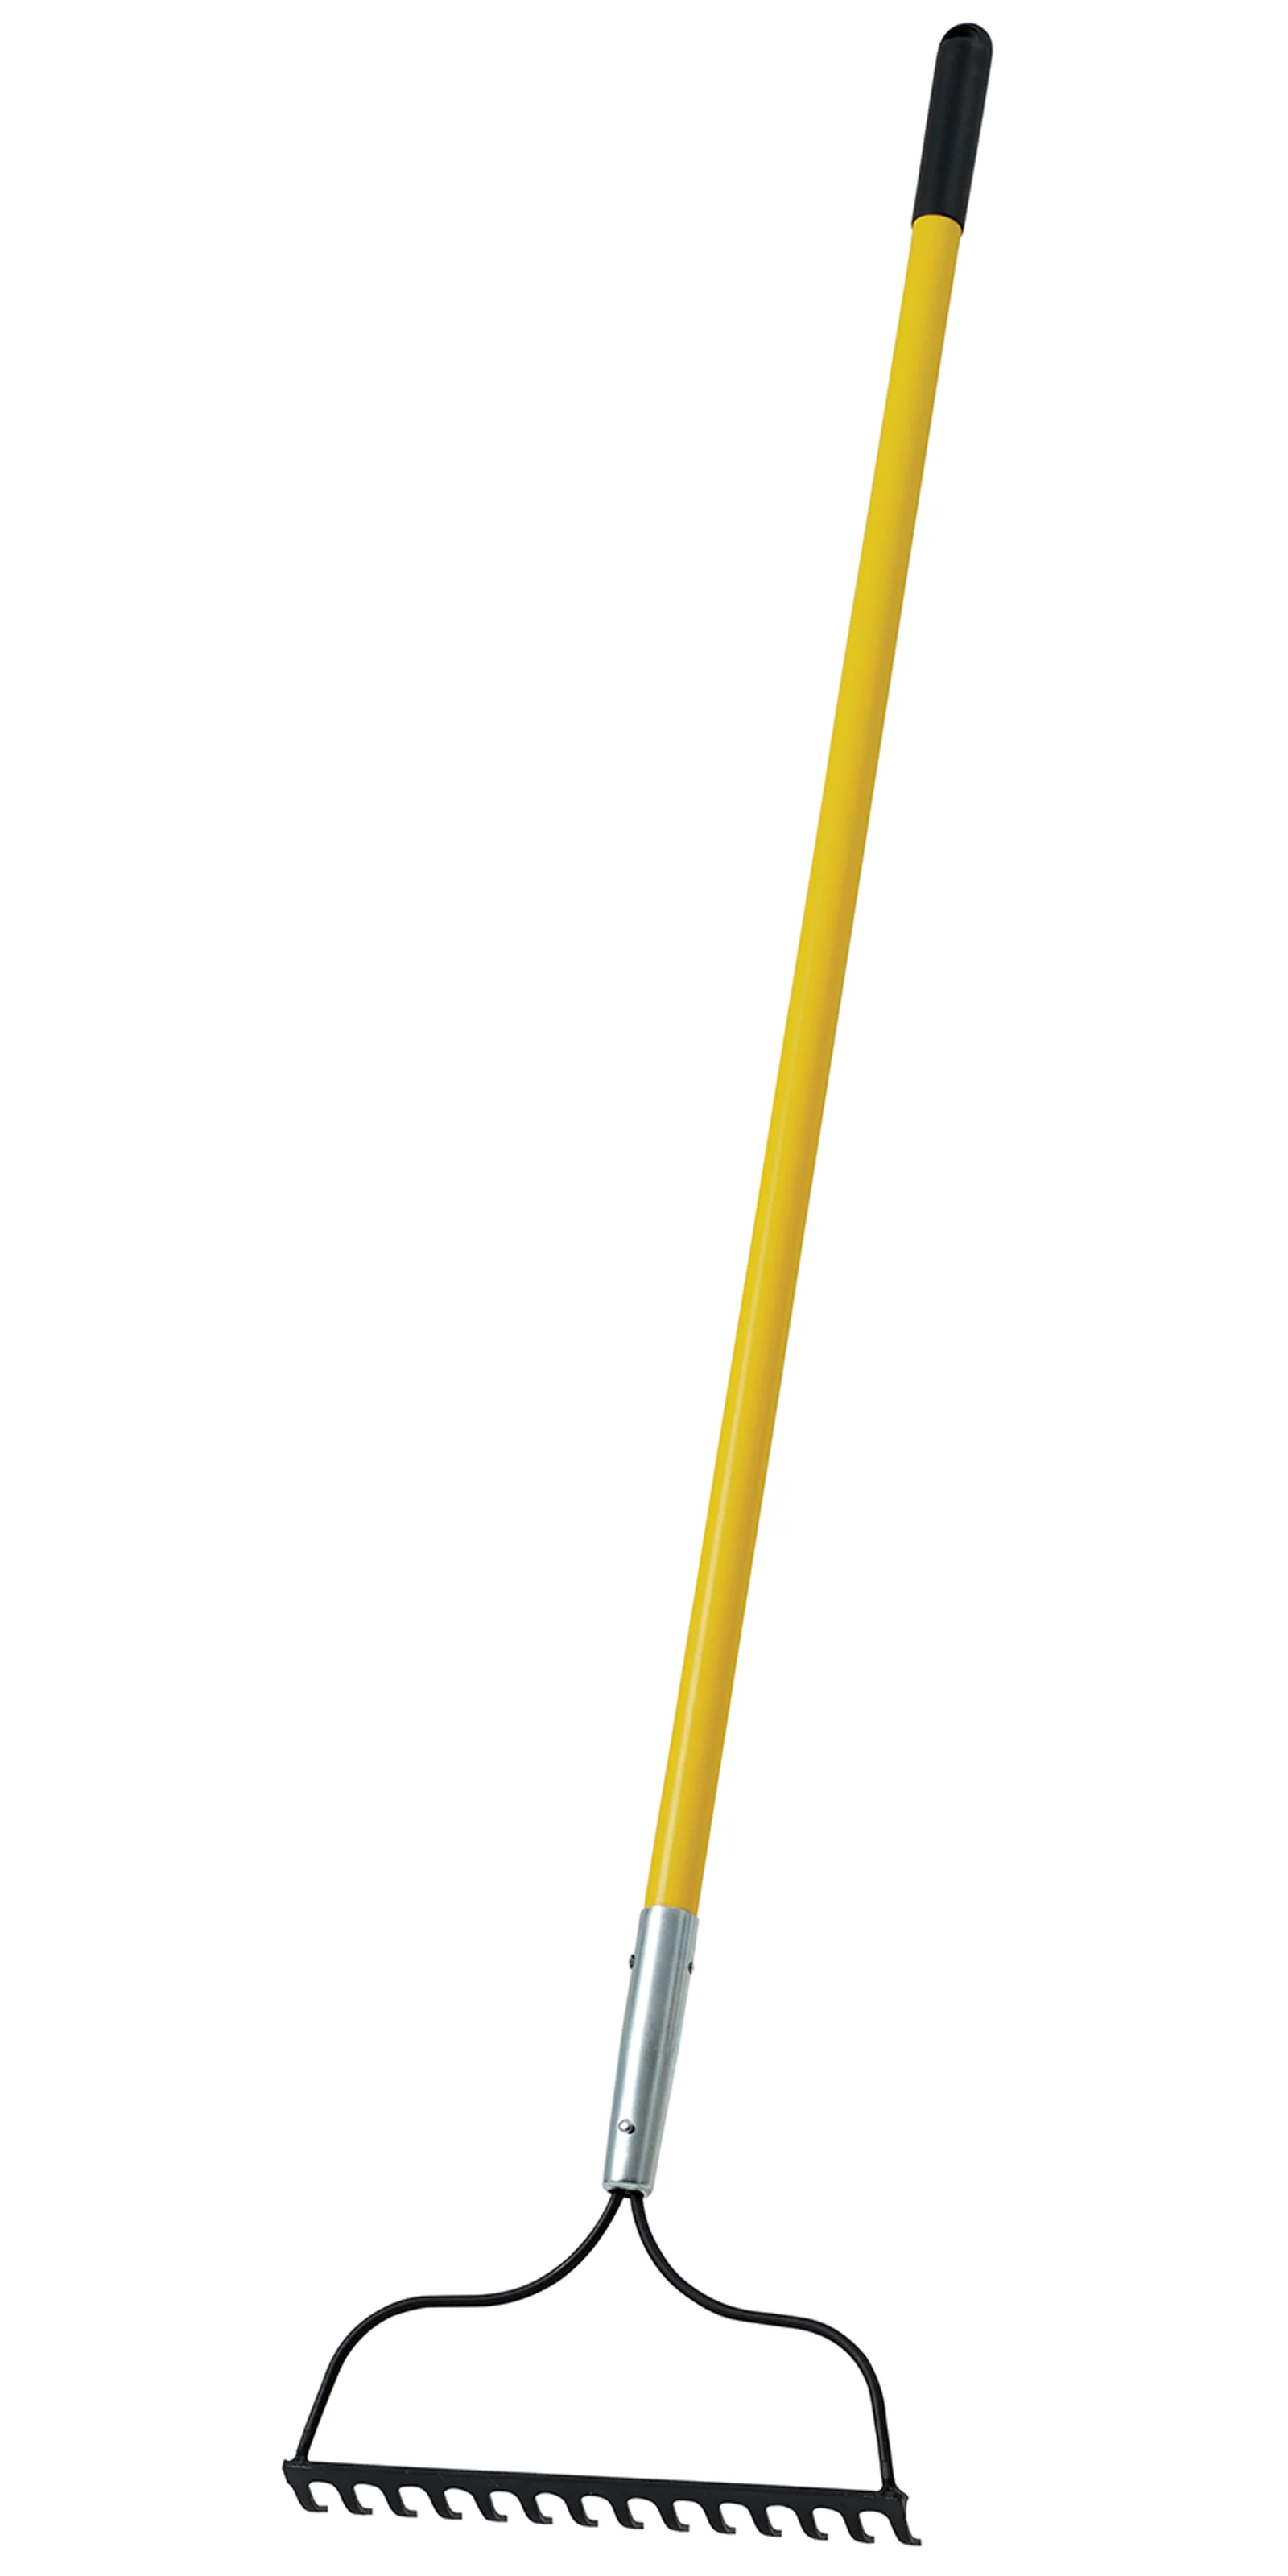 A bow rake 